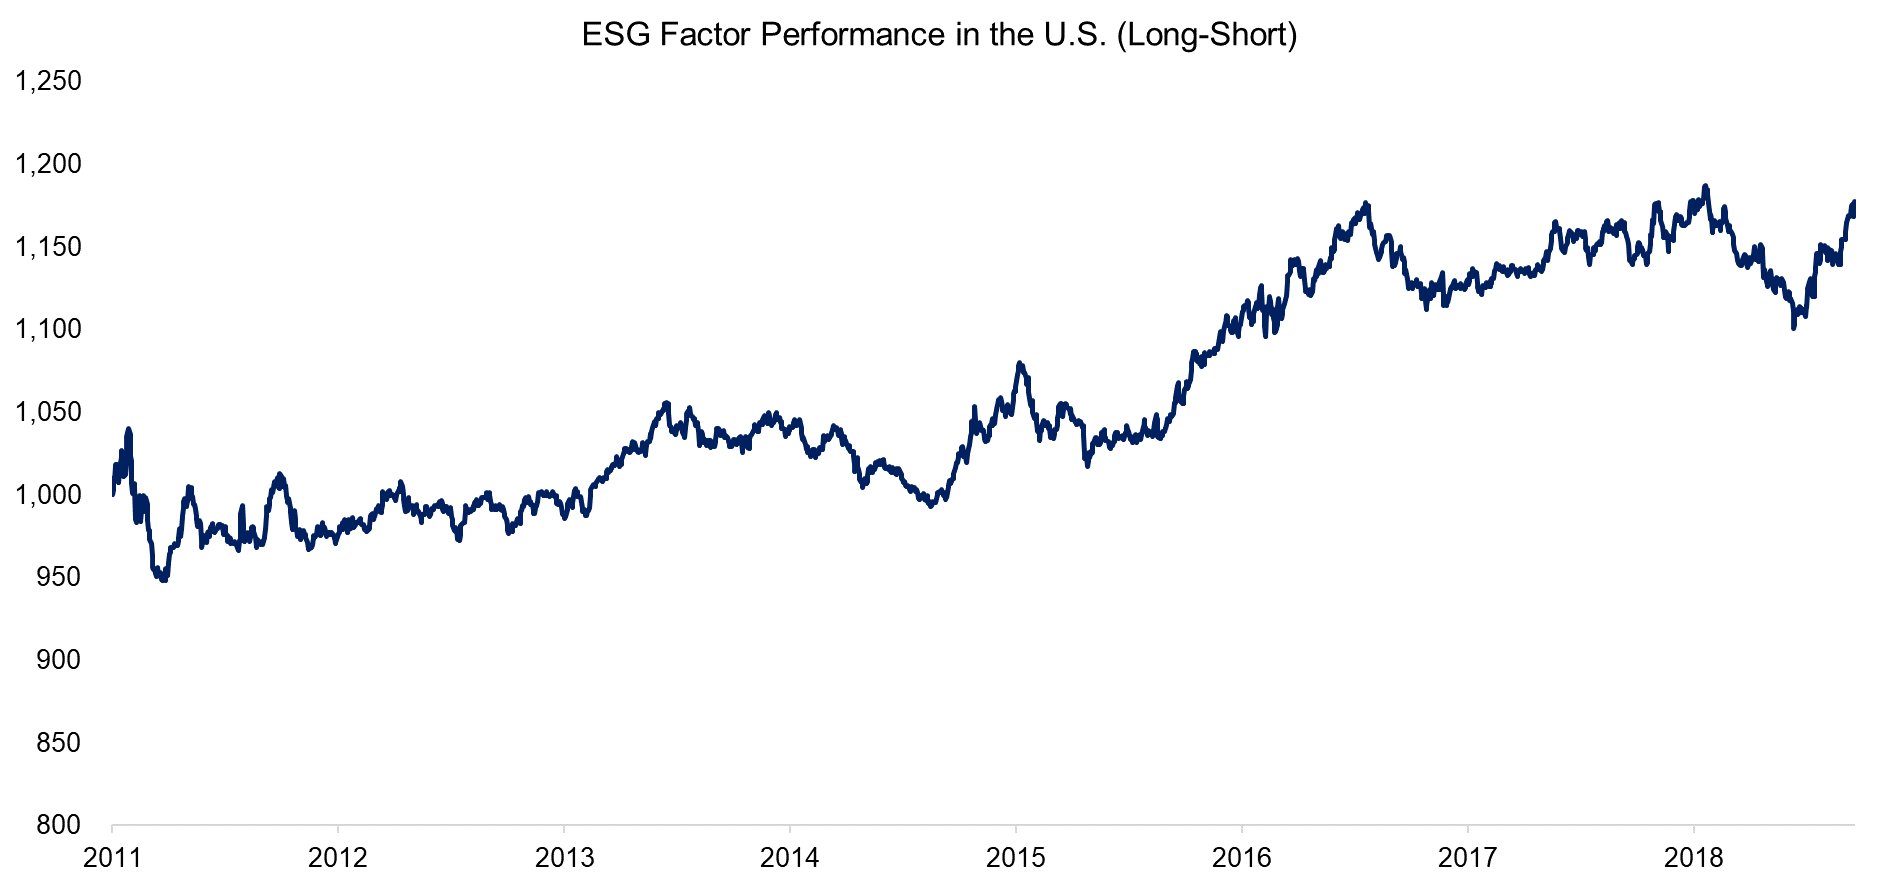 ESG Factor Performance in the U.S. (Long-Short)